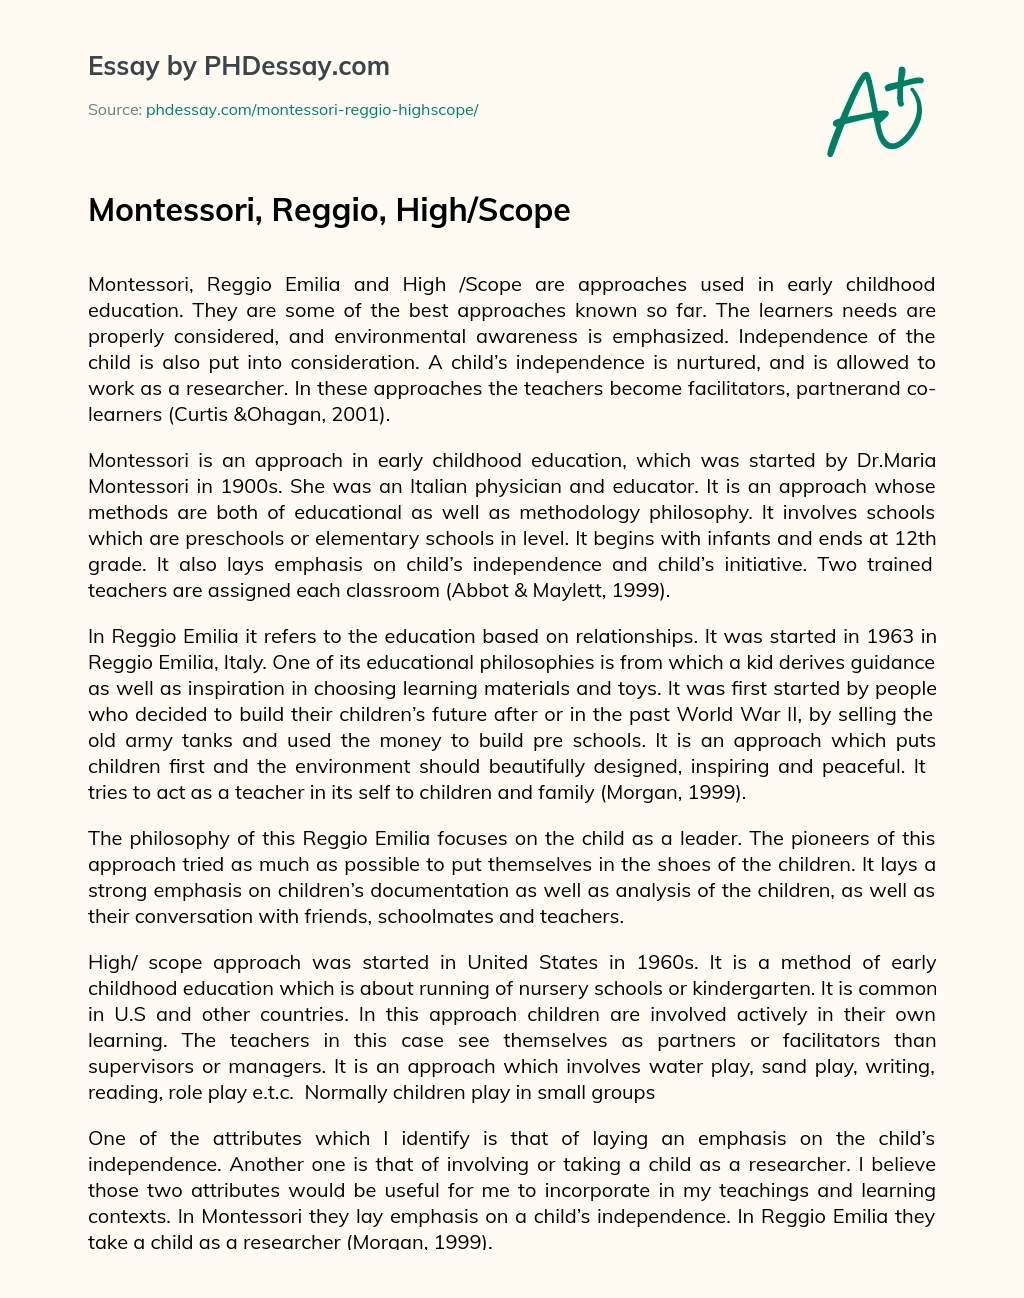 Montessori, Reggio, High/Scope essay